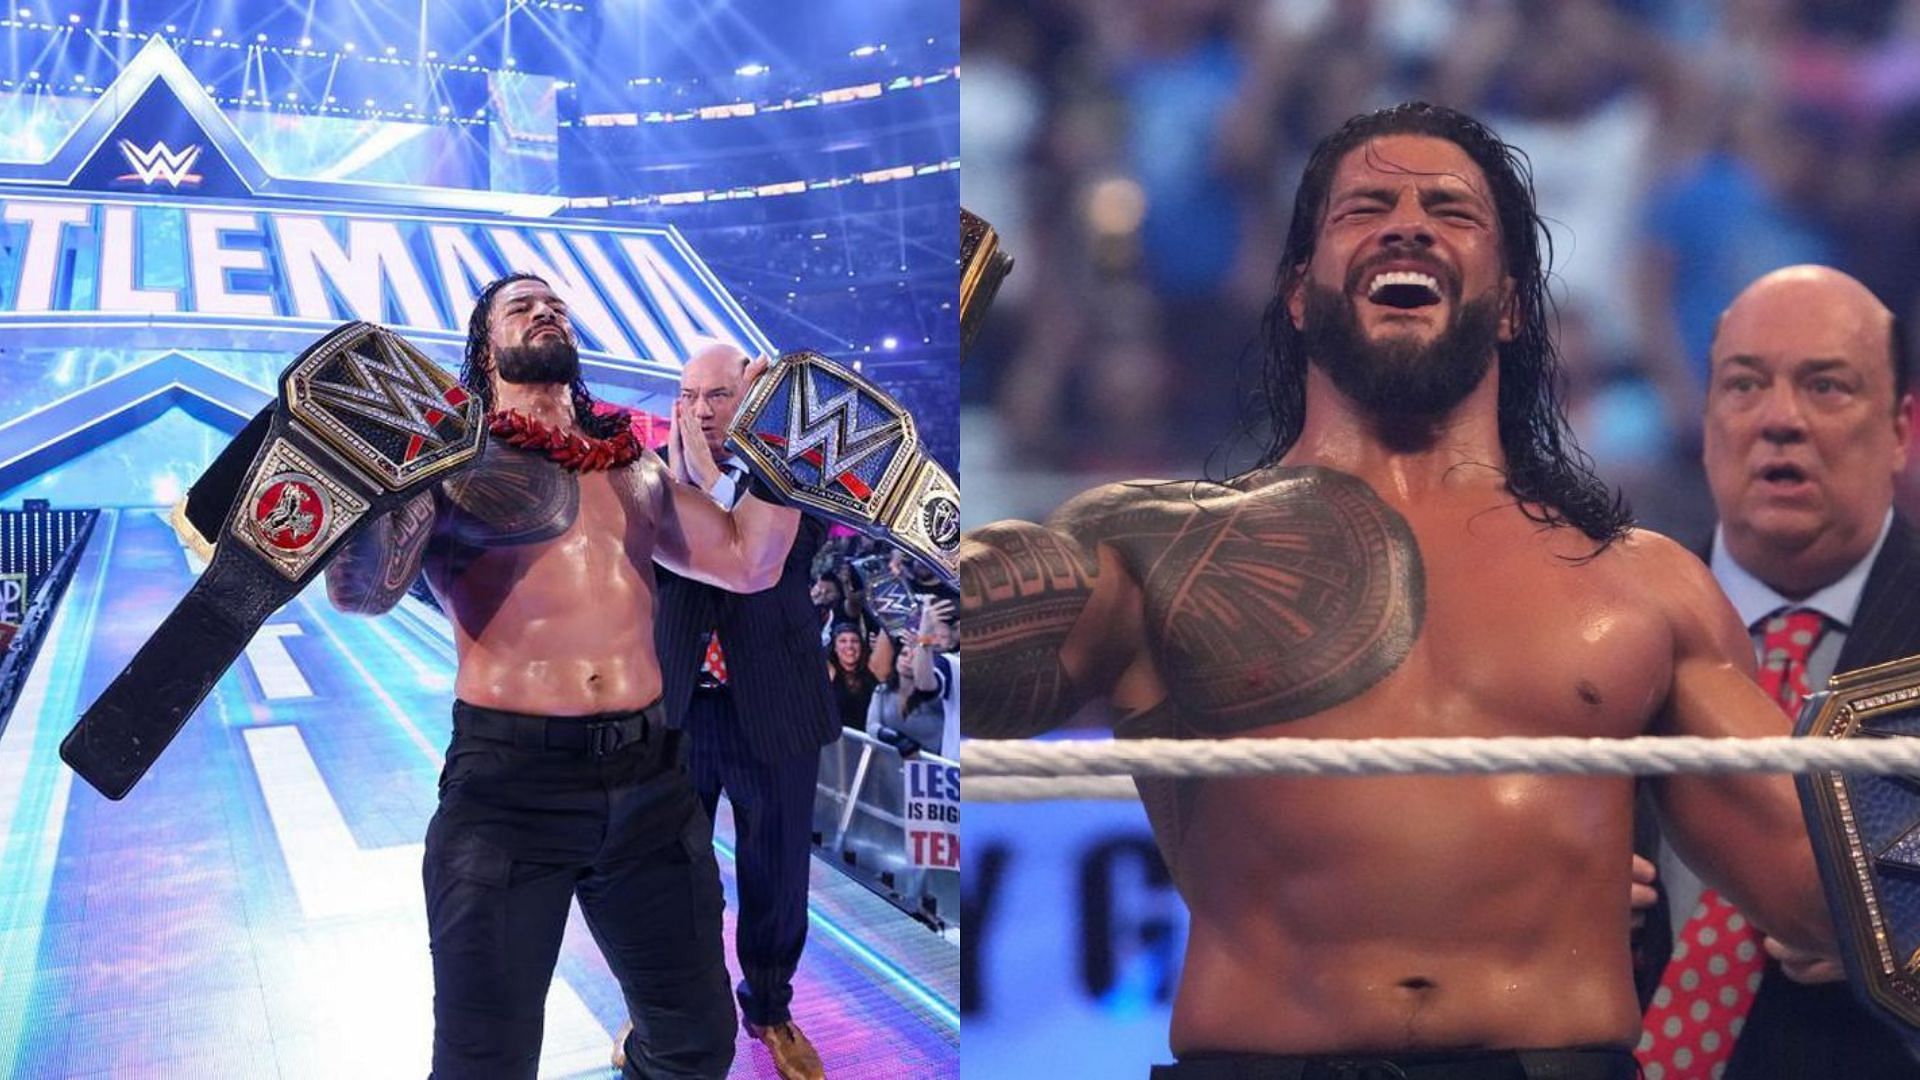 Roman Reigns will aim to headline yet another WrestleMania